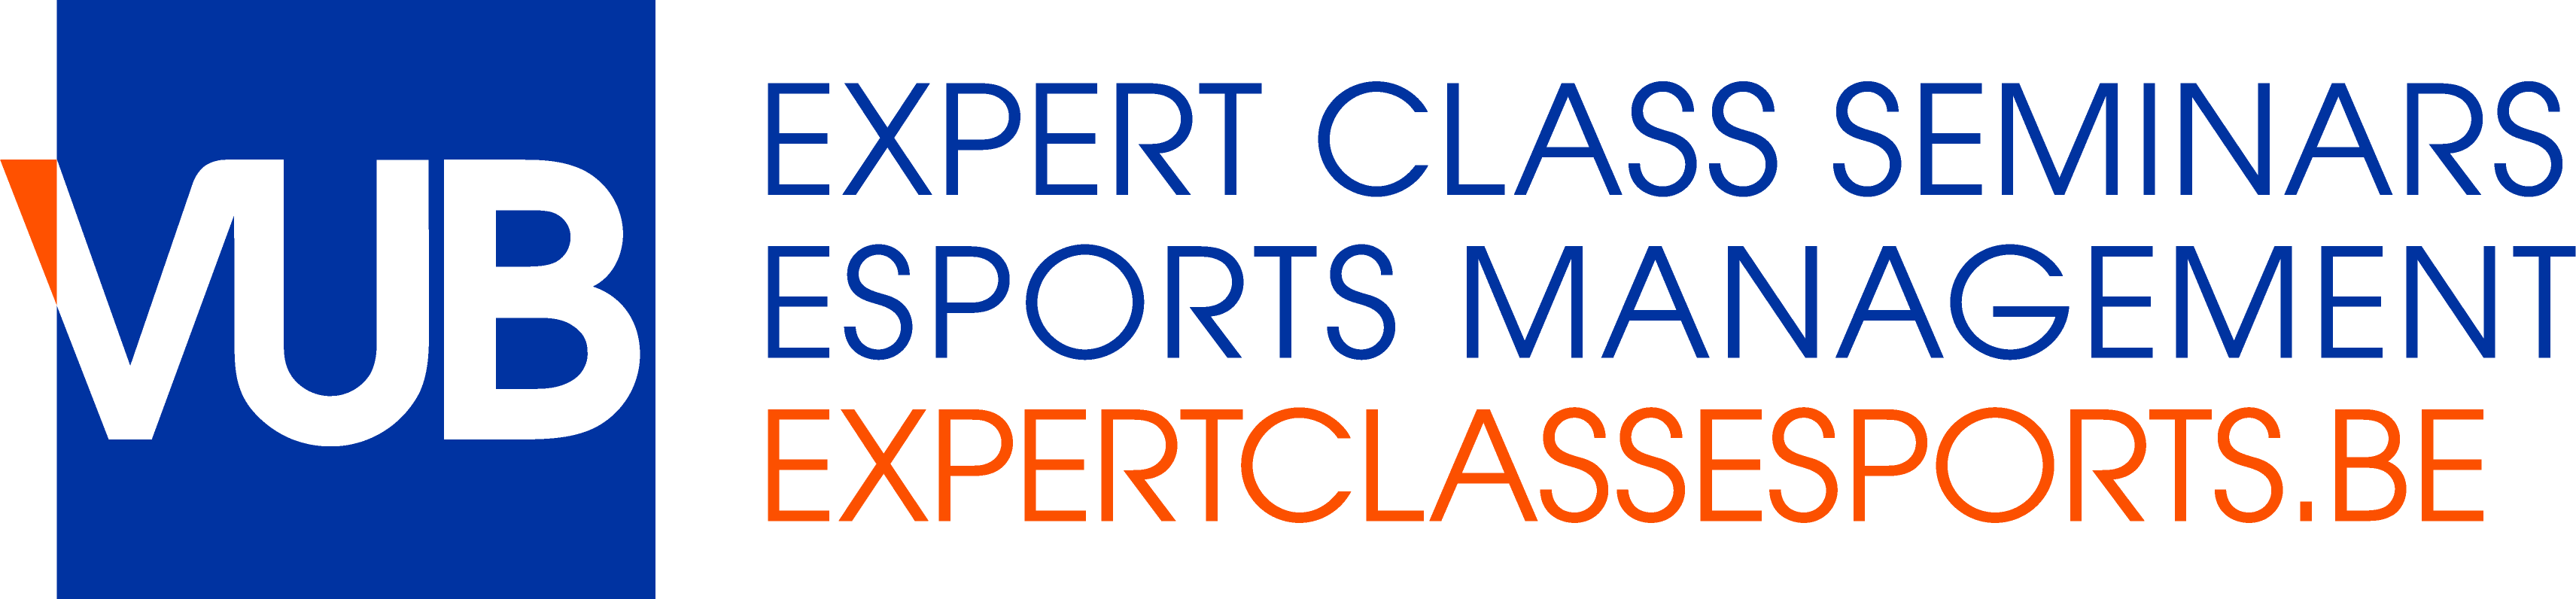 Expert Class Seminars in Esports Management